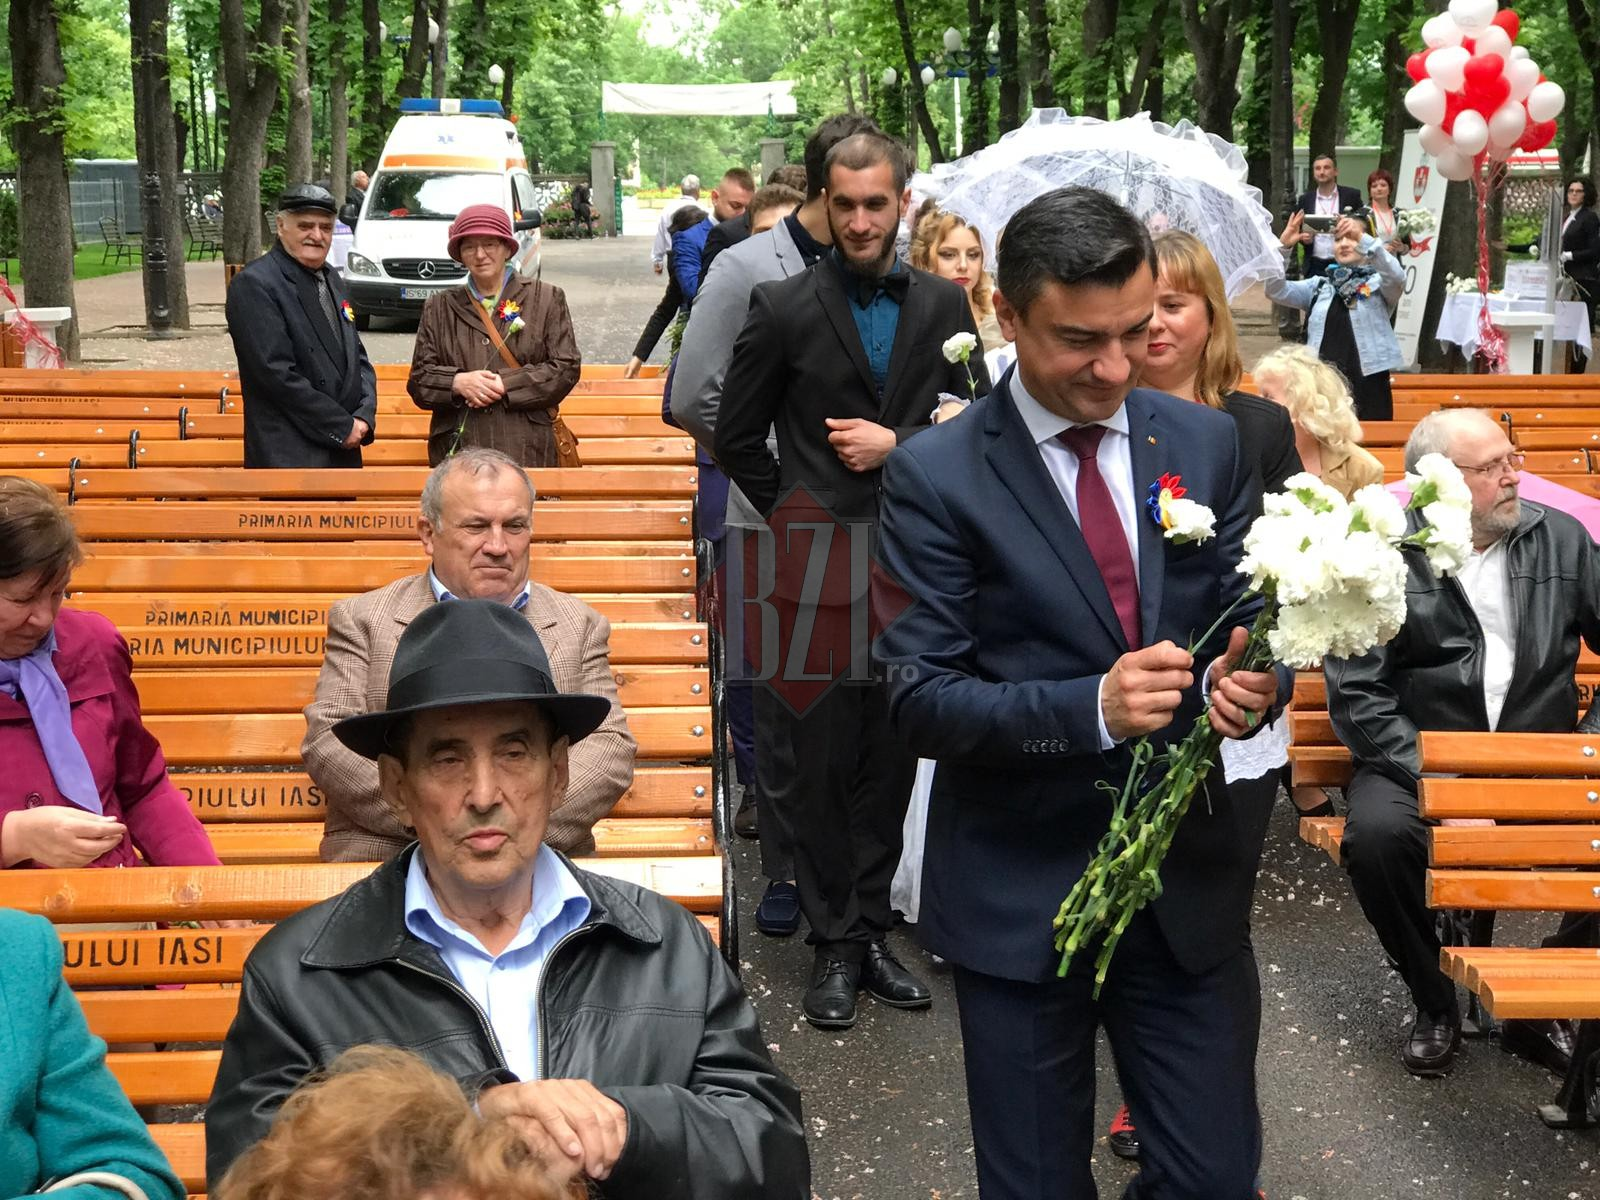  Mihai Chirica are un buchet de flori in mana, mai multe persoane varstnice in jur